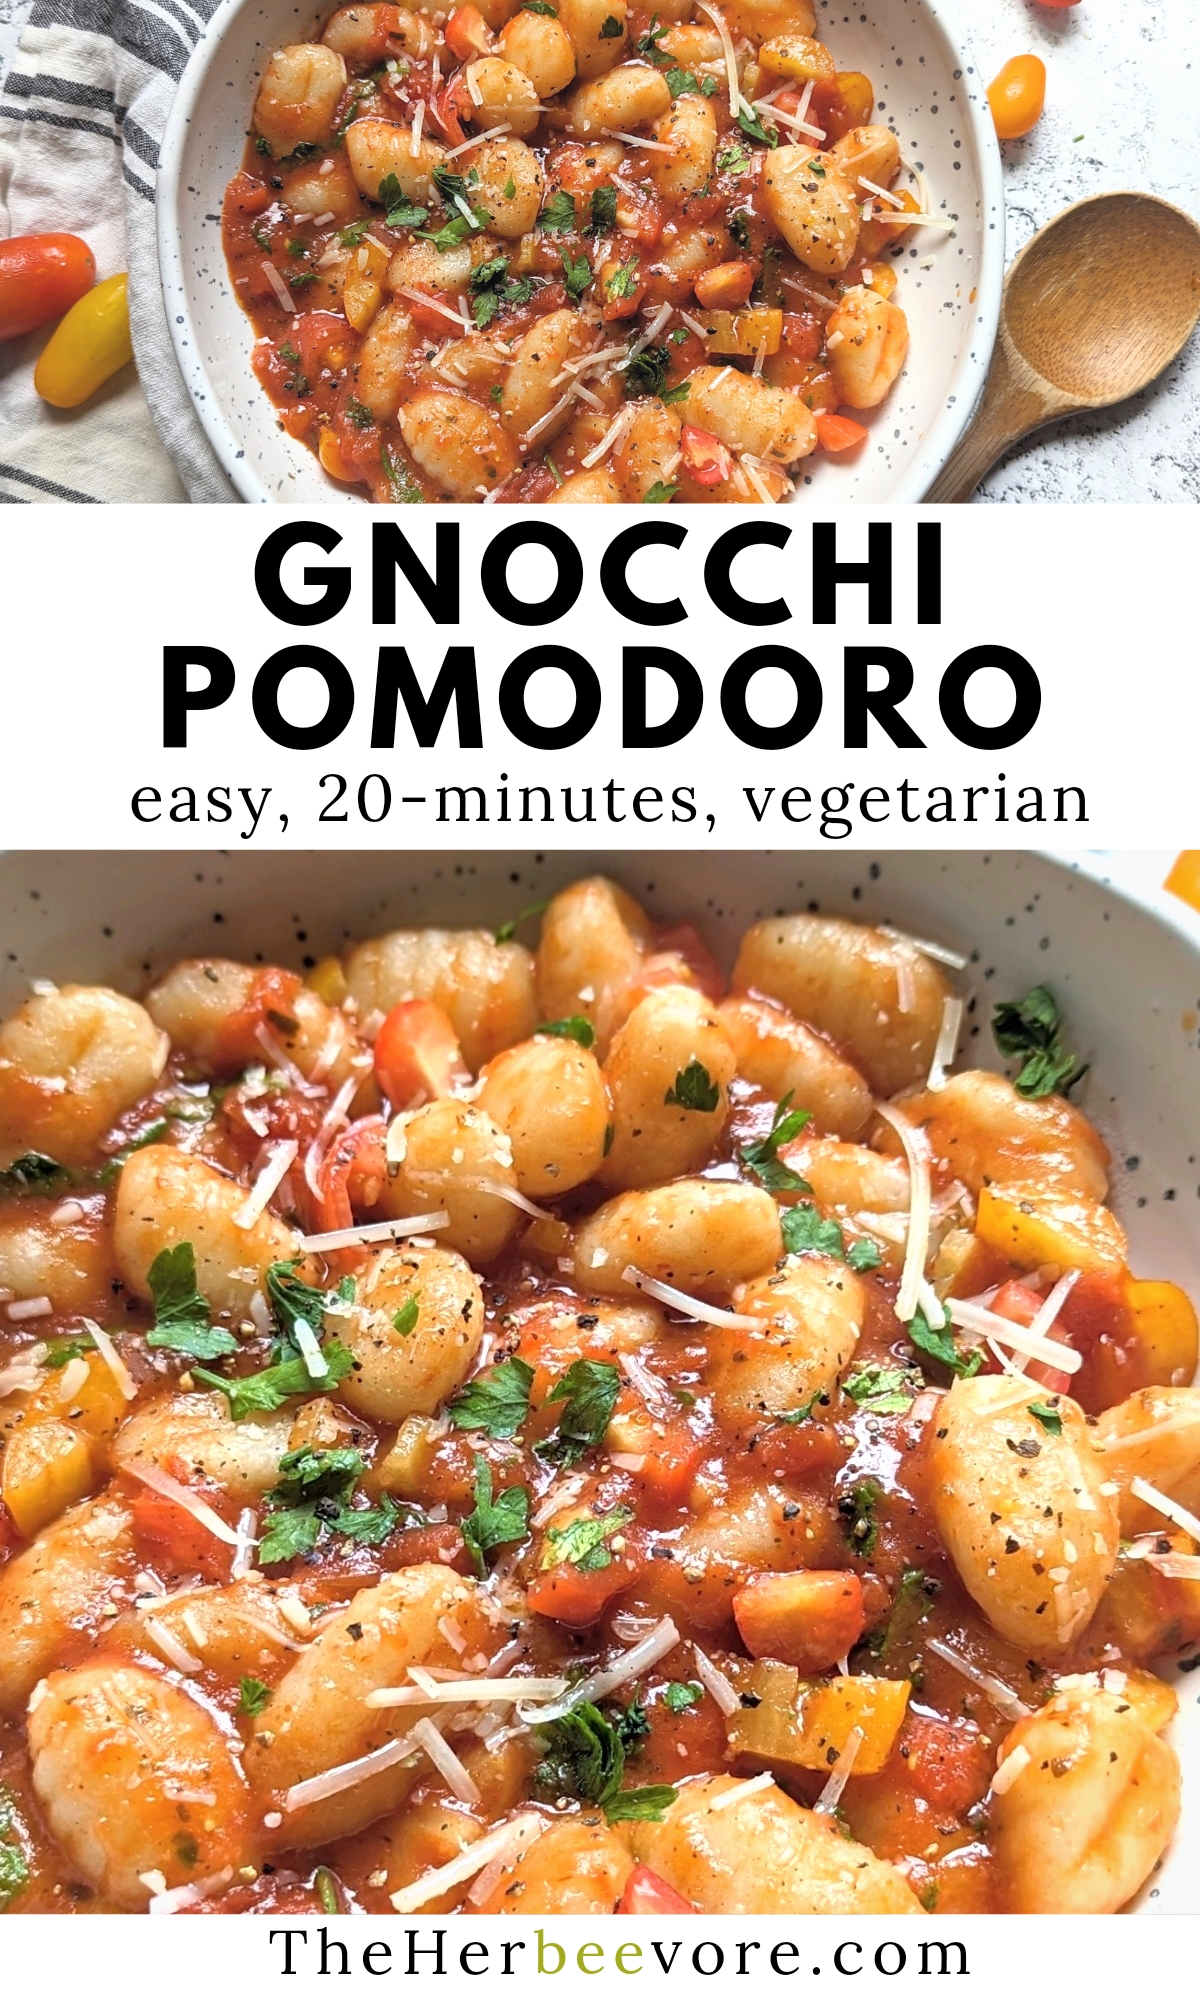 gnocchi pomodoro pasta recipe easy 20 minute pastas vegetarian dinners with gnocchi and simple tomato sauce